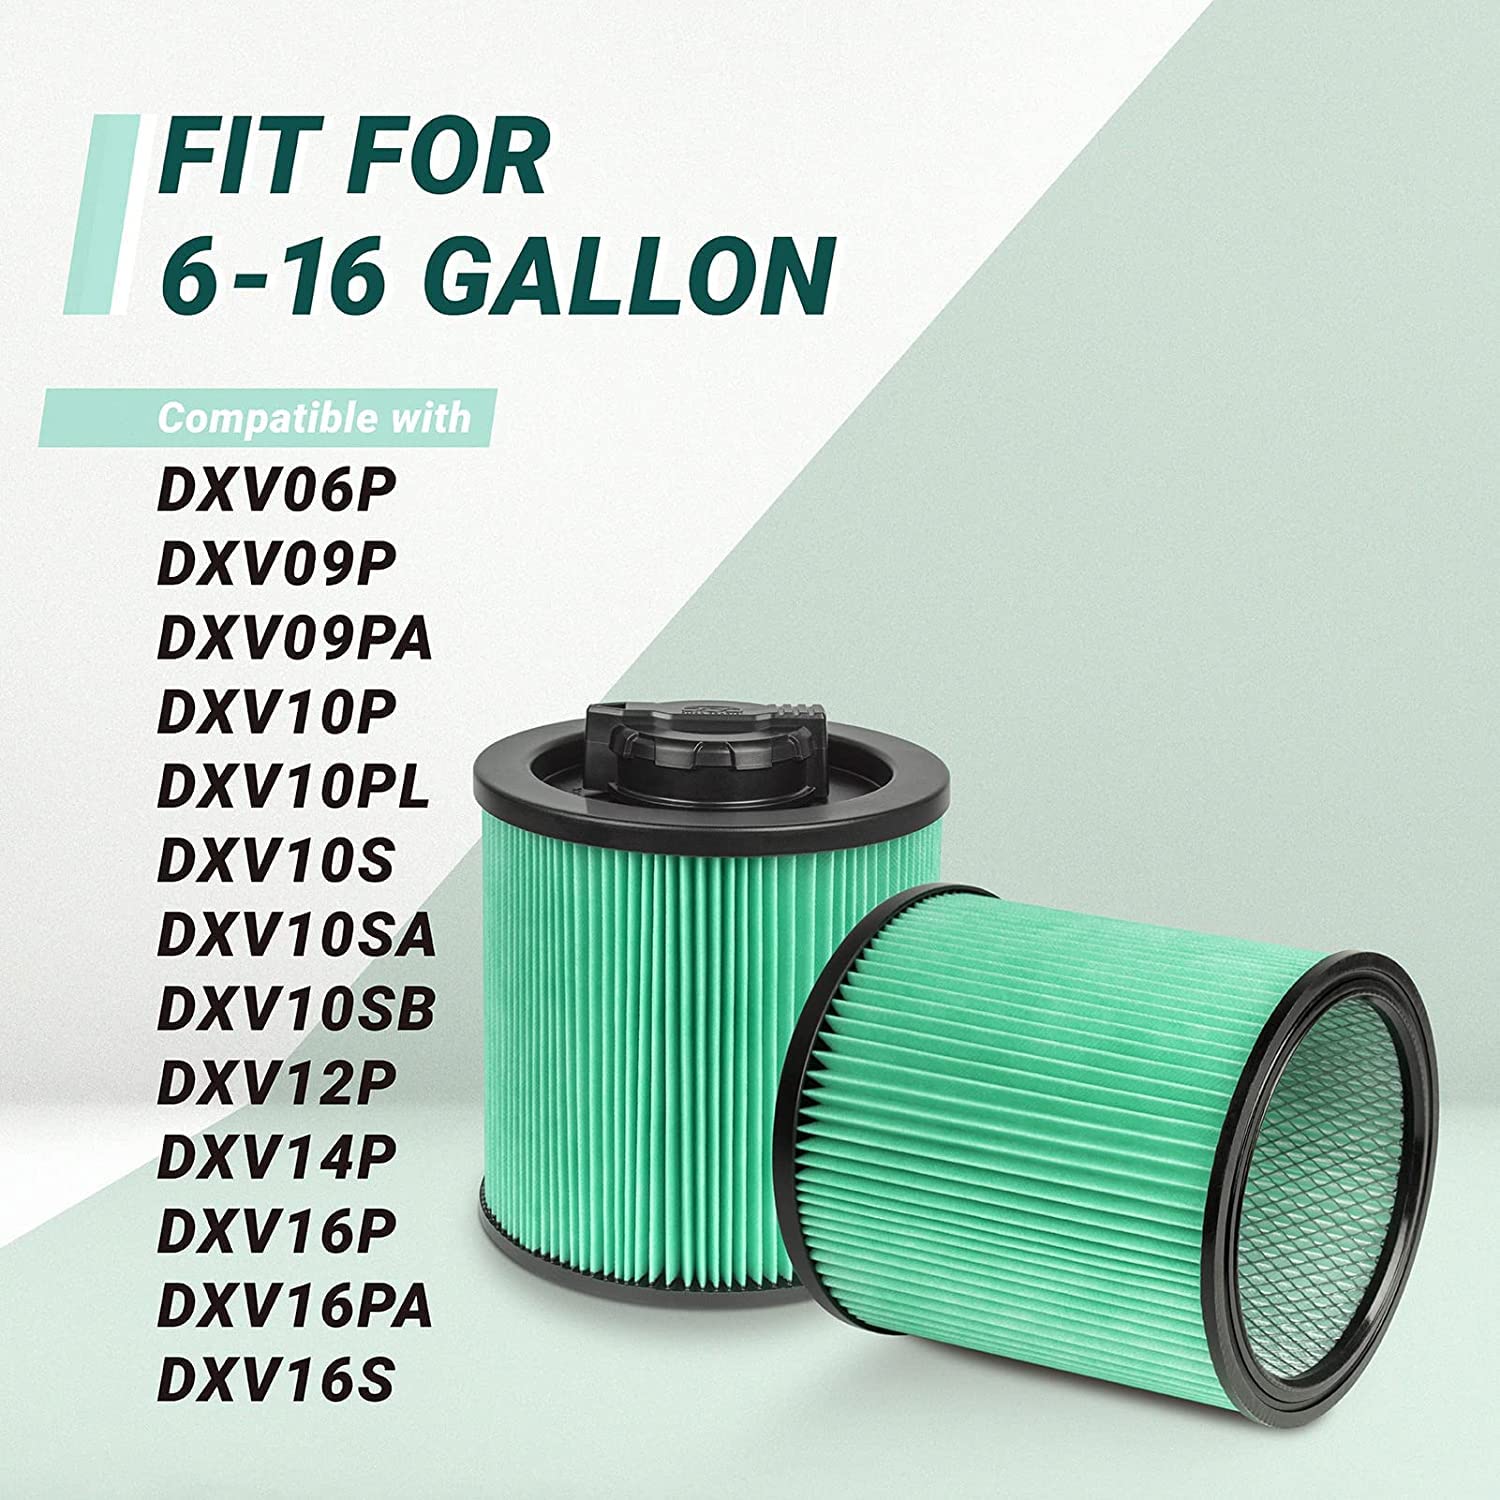 DXVC6914 Shop Vac Filter for DEWALT HEPA Cartridge Filter, Fit for 6-16 Gallon Wet/Dry Filter Vacuum Cleaners DXV06P DXV09P DXV10P DXV10PL DXV10SA DXV12P DXV14P DXV16P 2pcs